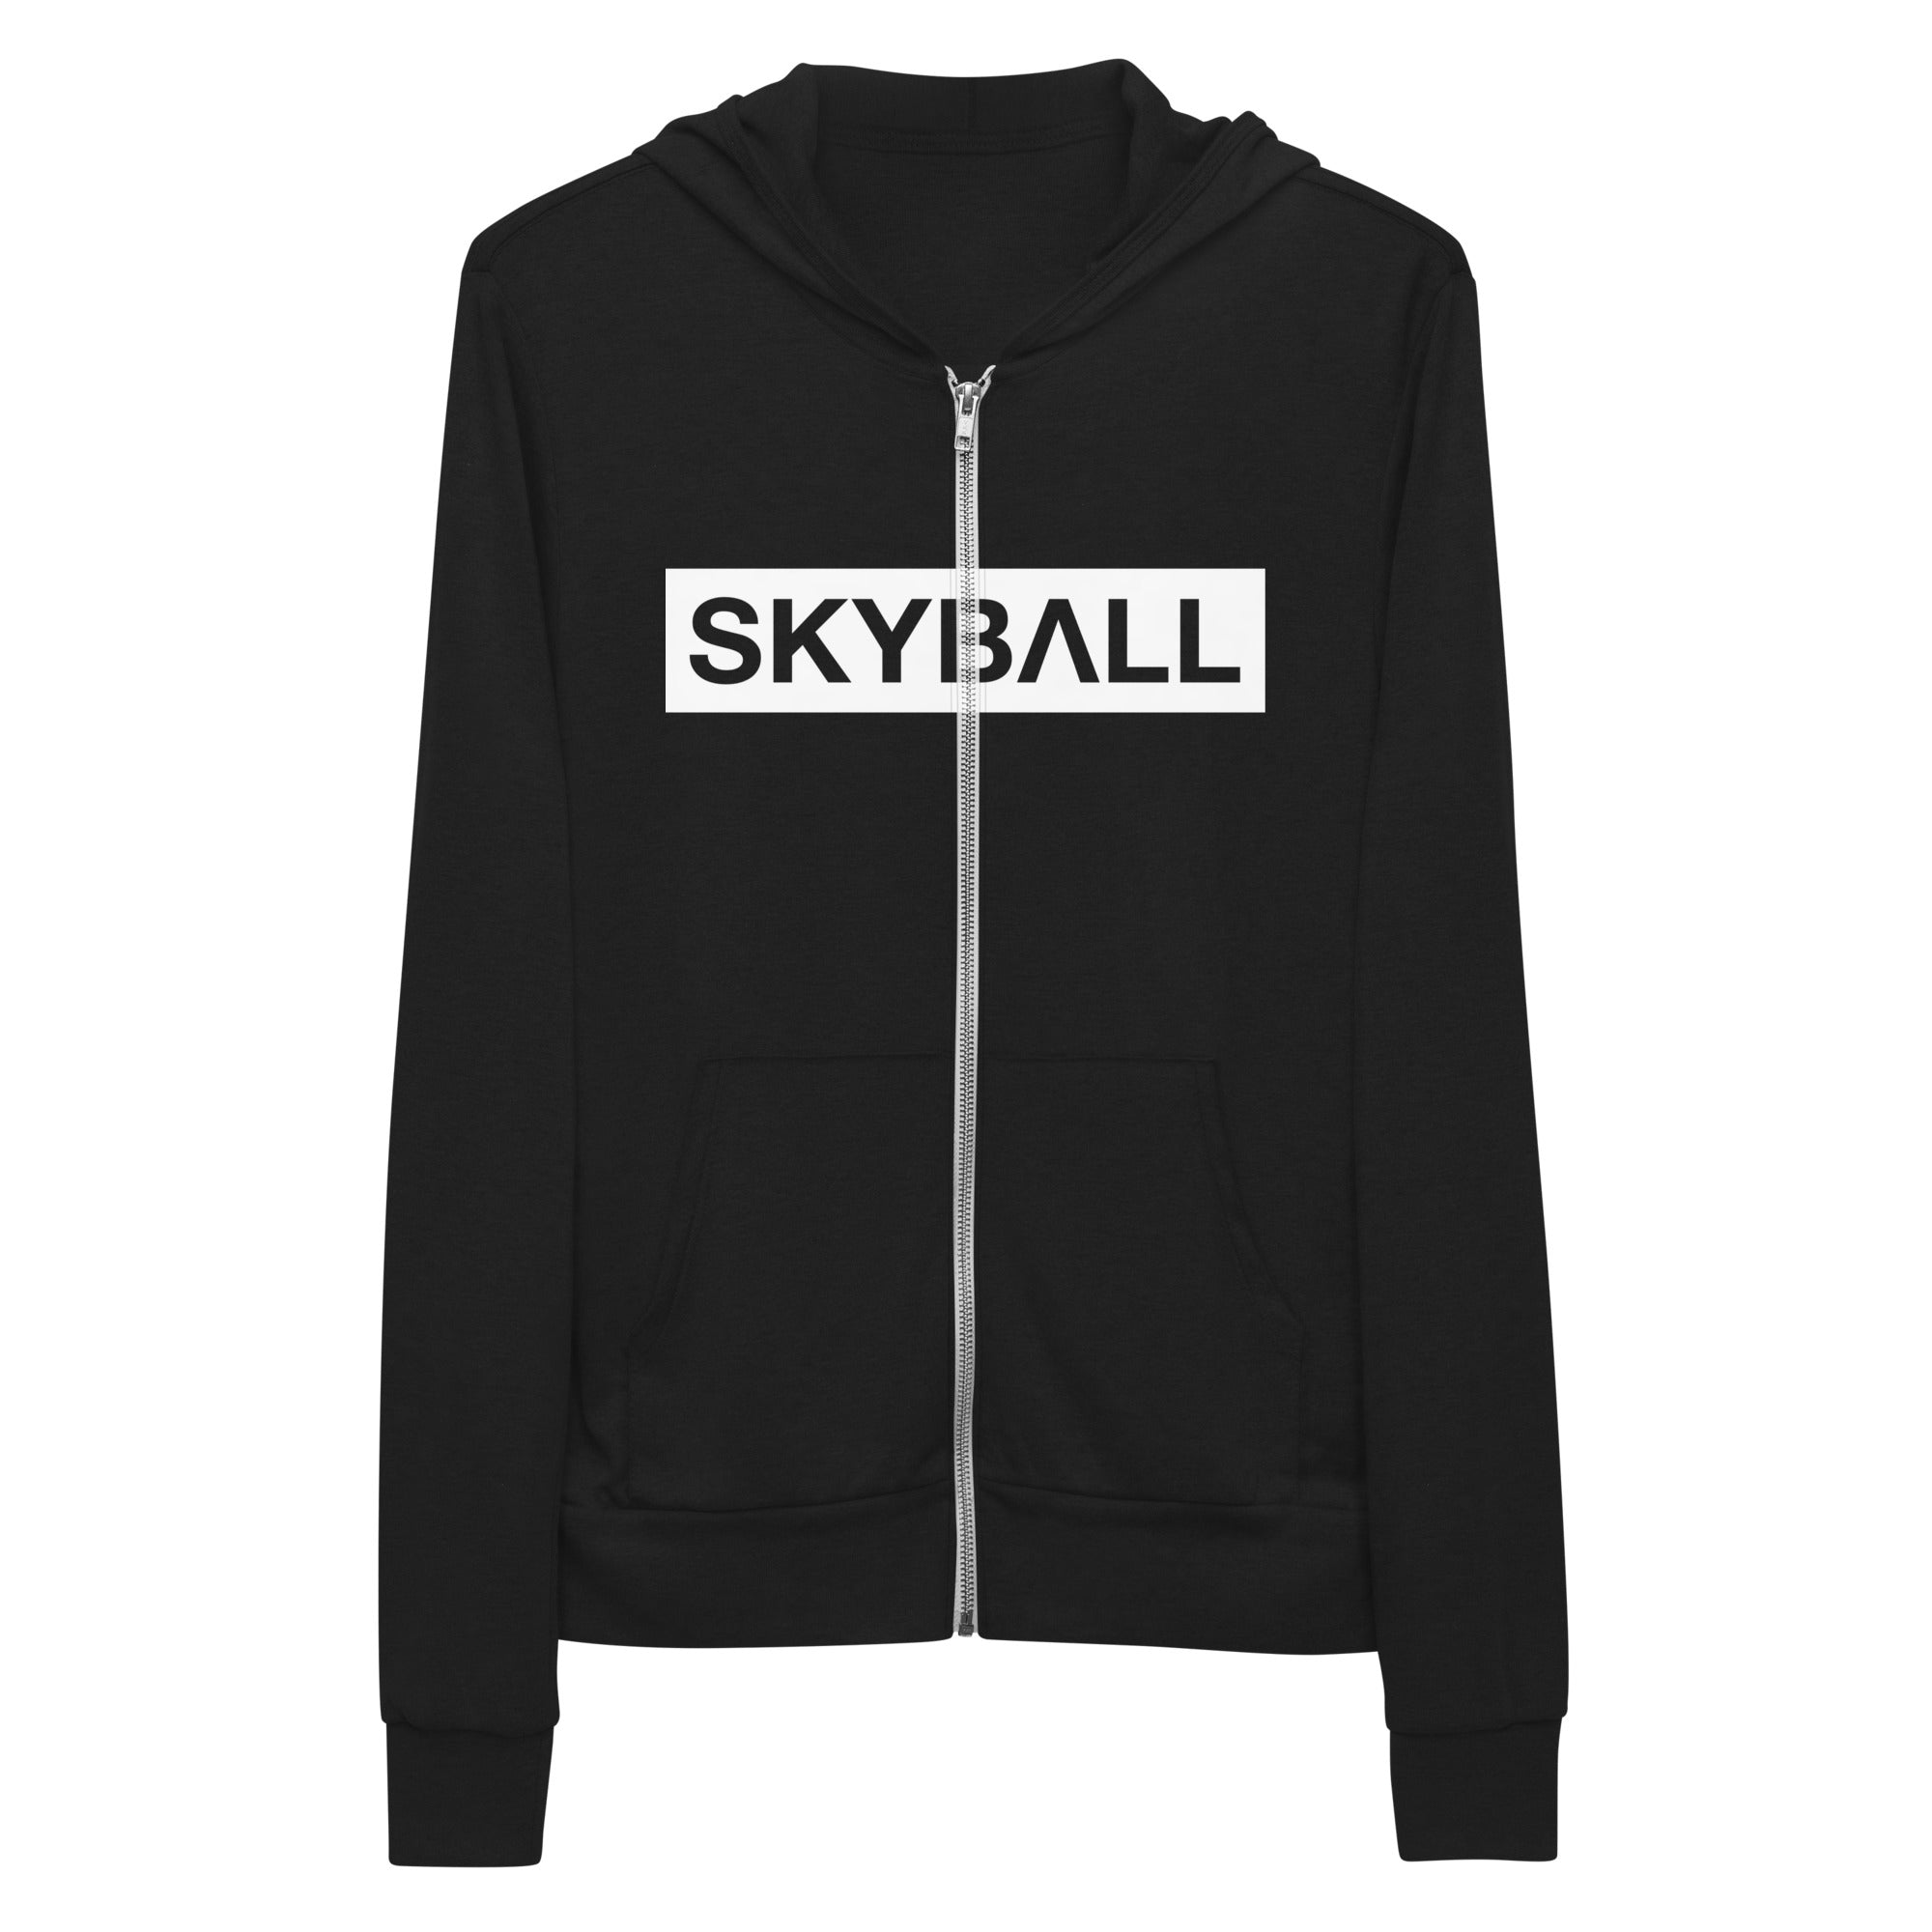 Skyball Beach Volleyball Apparel - Reverse Unisex Zip Hoodie